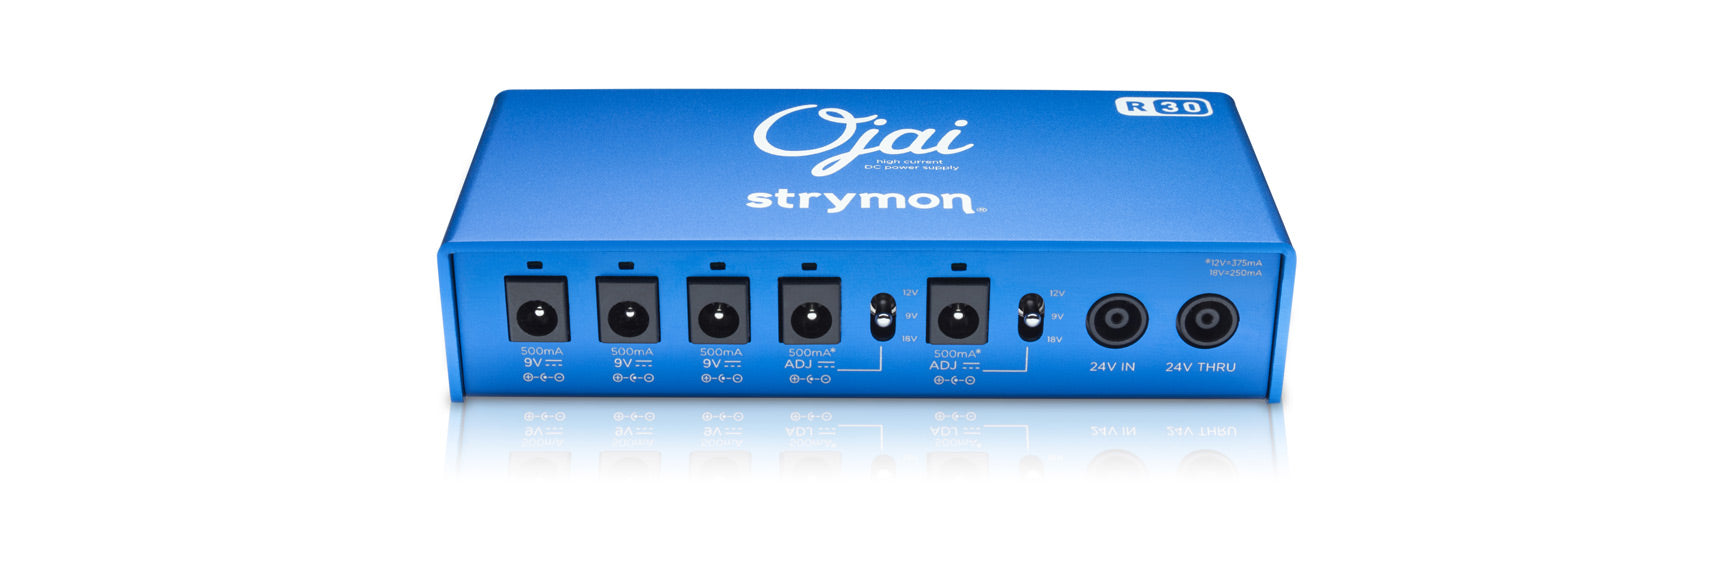 Strymon Ojai R30 – Expansion Kit